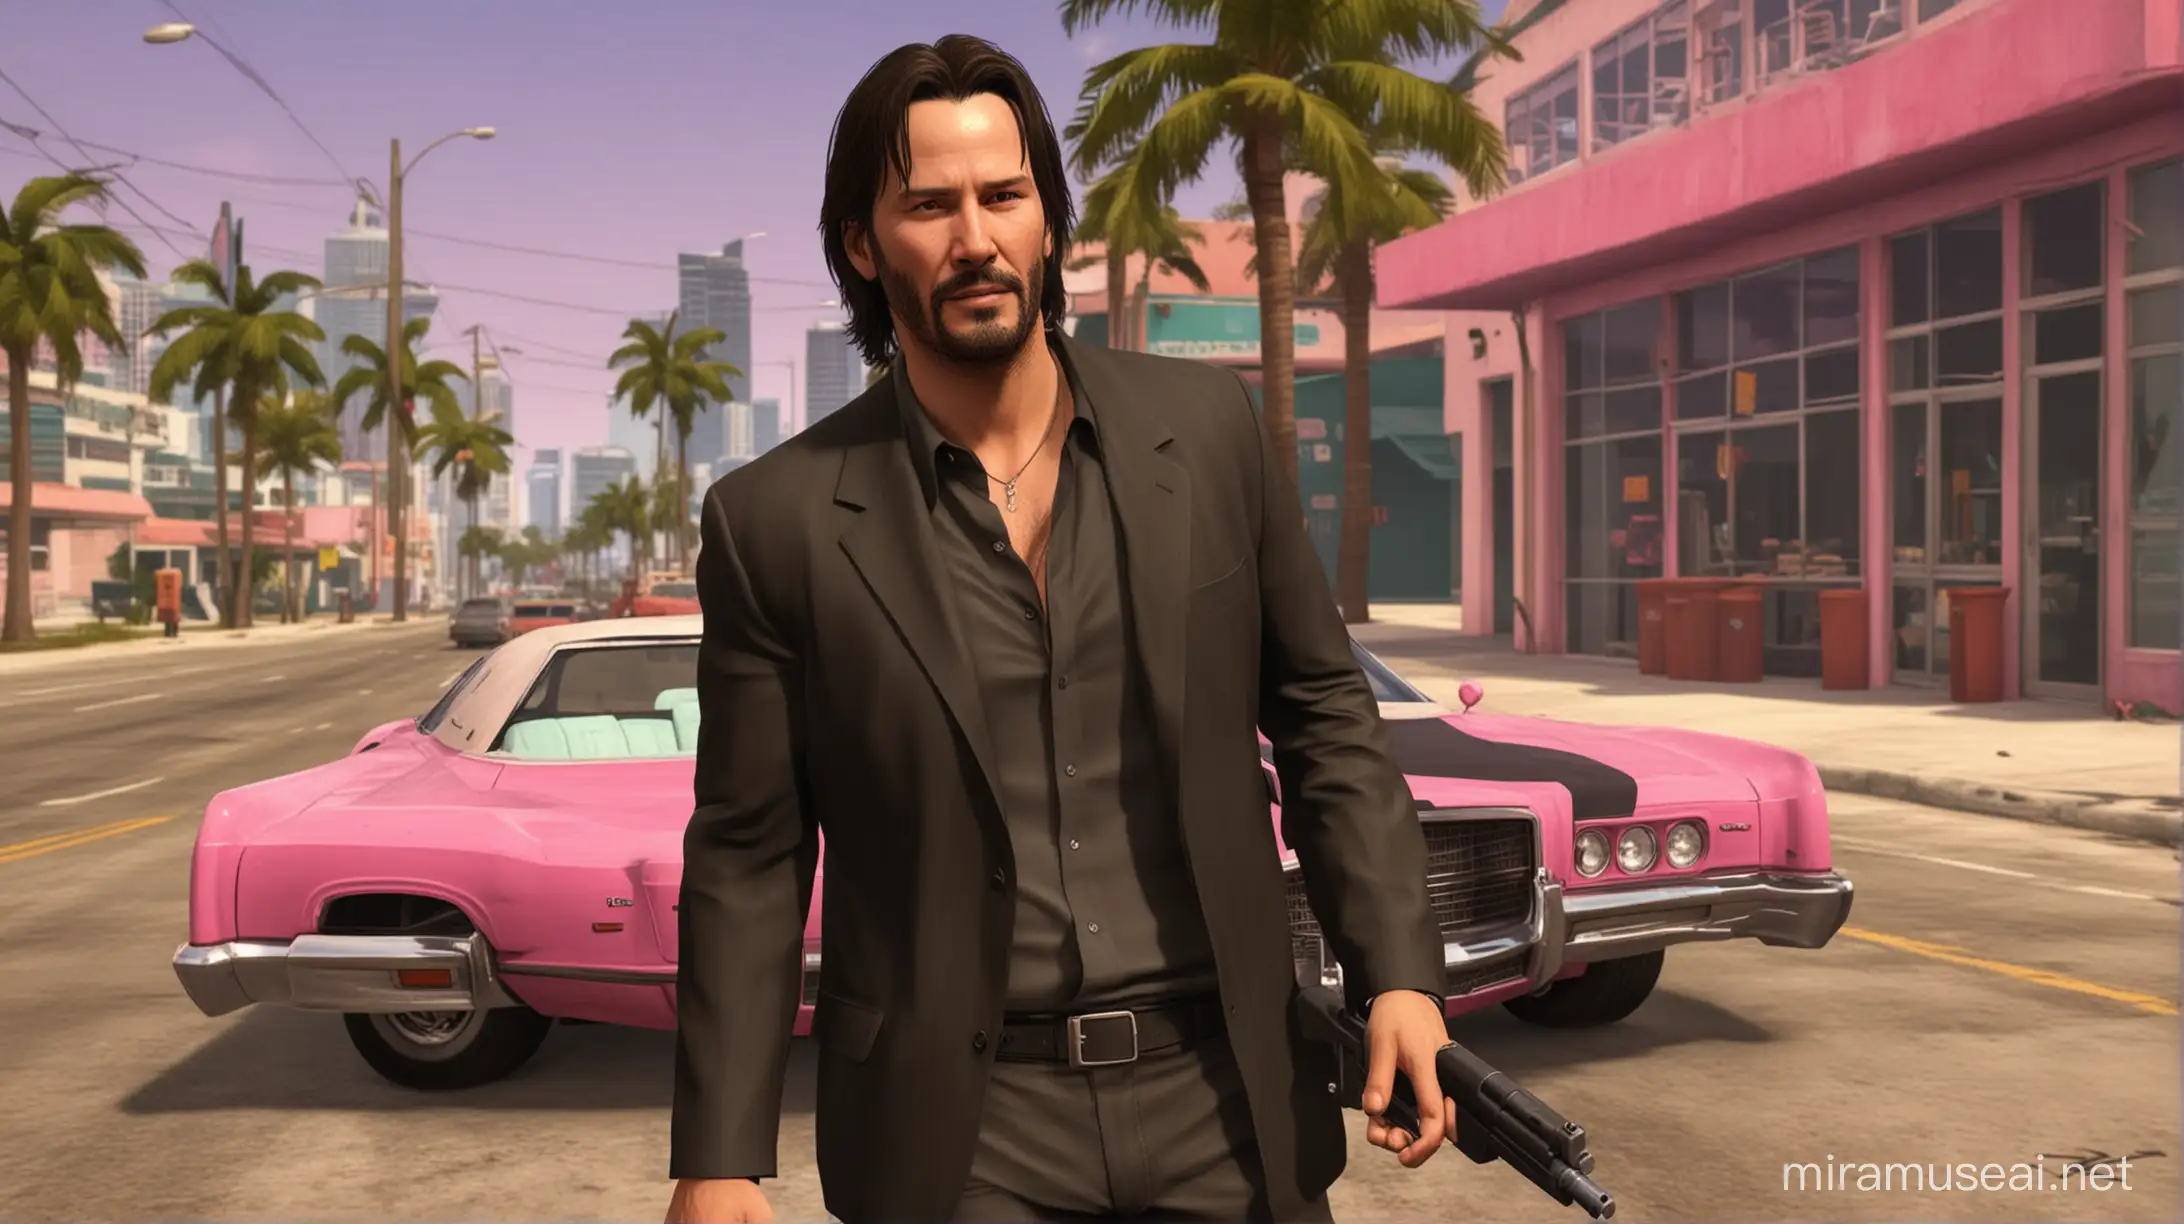 Keanu Reeves Immersed in GTA Vice CityInspired World